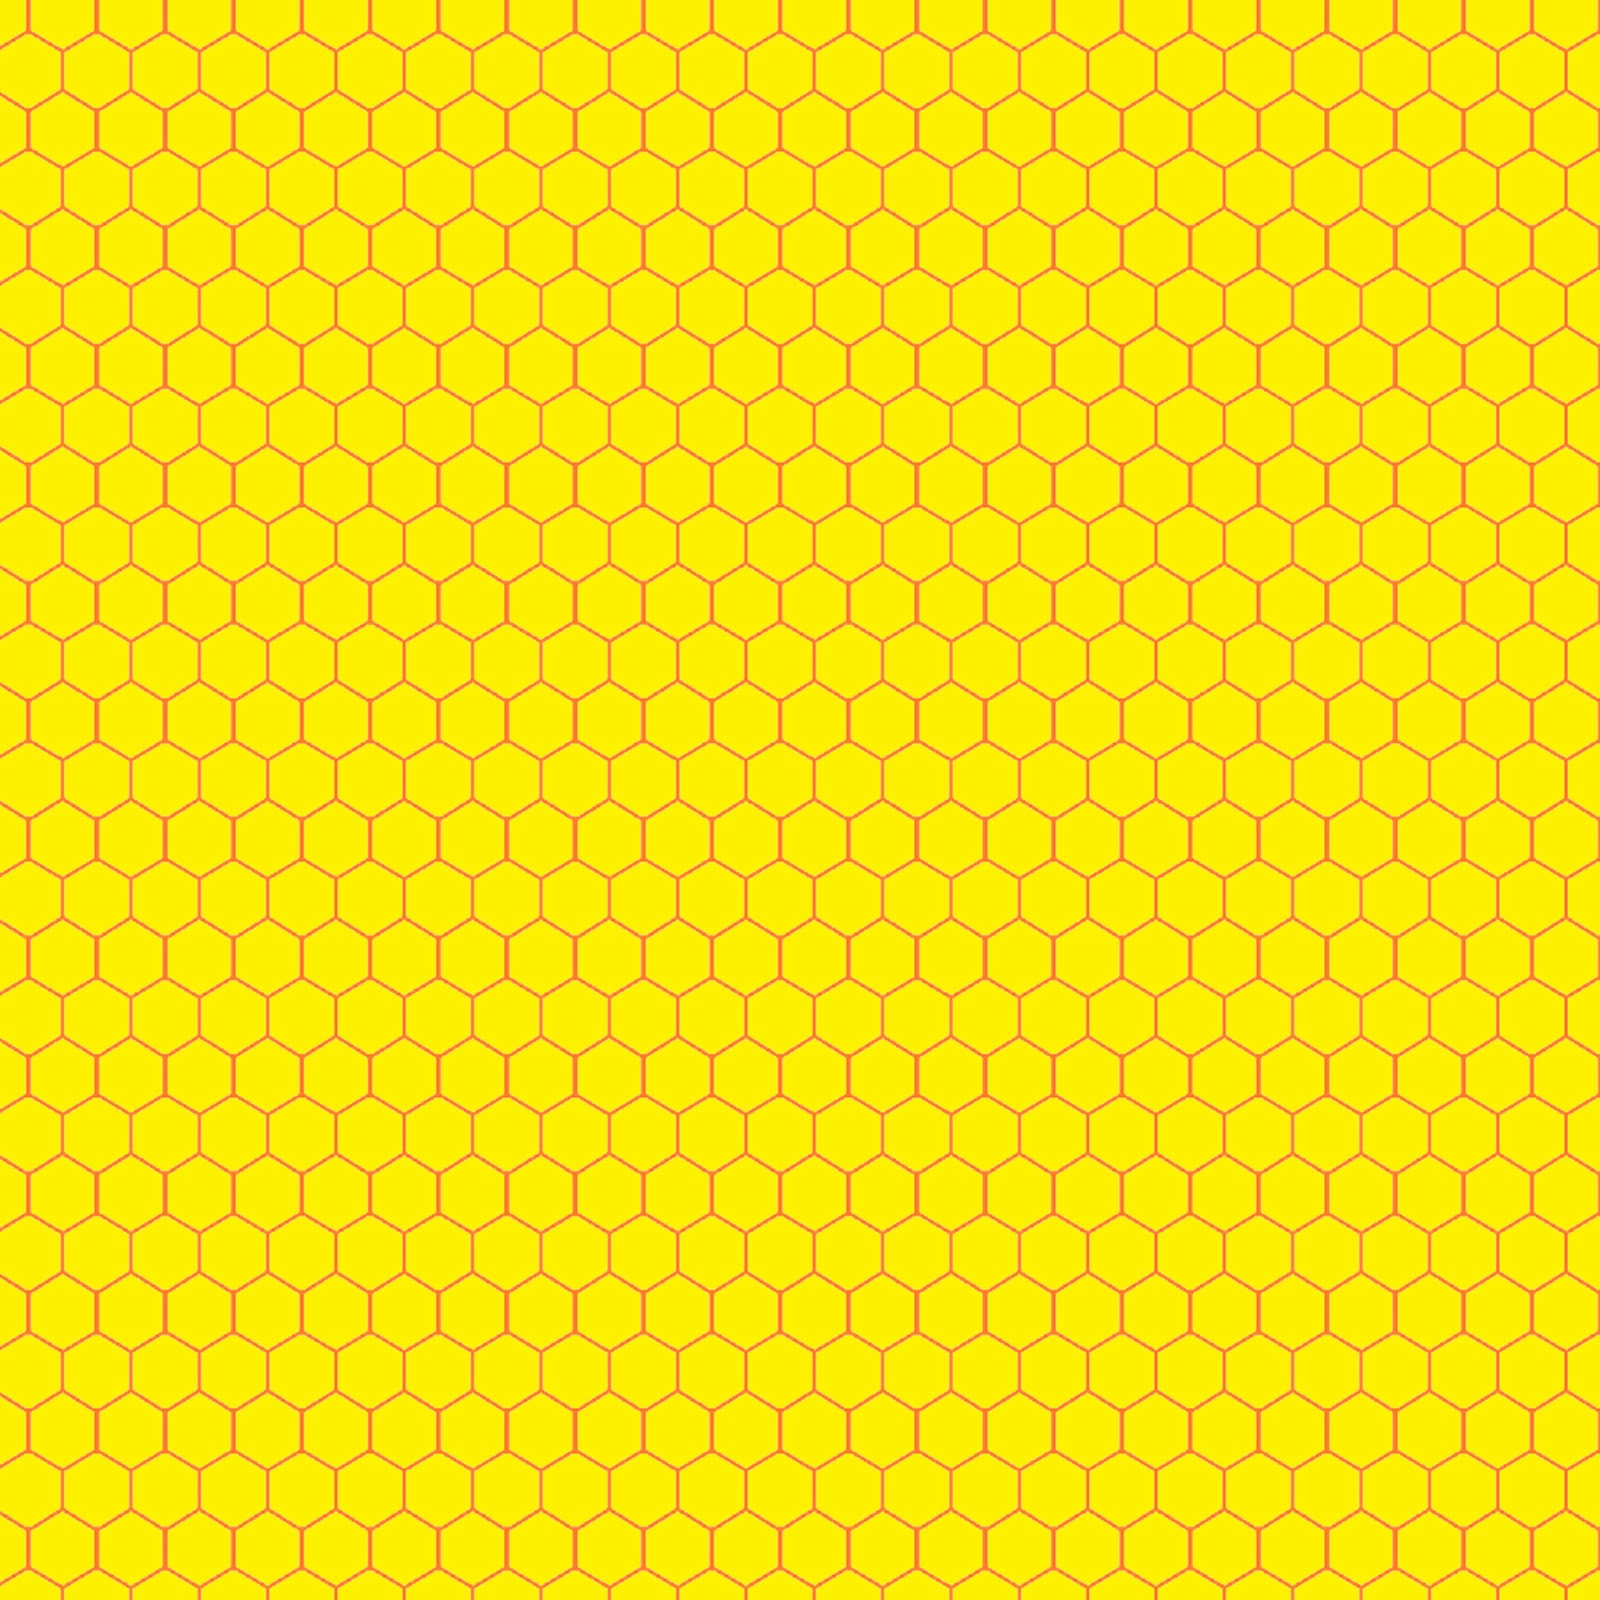 Doodlecraft Hexagon Honeycomb Freebie Background Pattern Afalchi Free images wallpape [afalchi.blogspot.com]